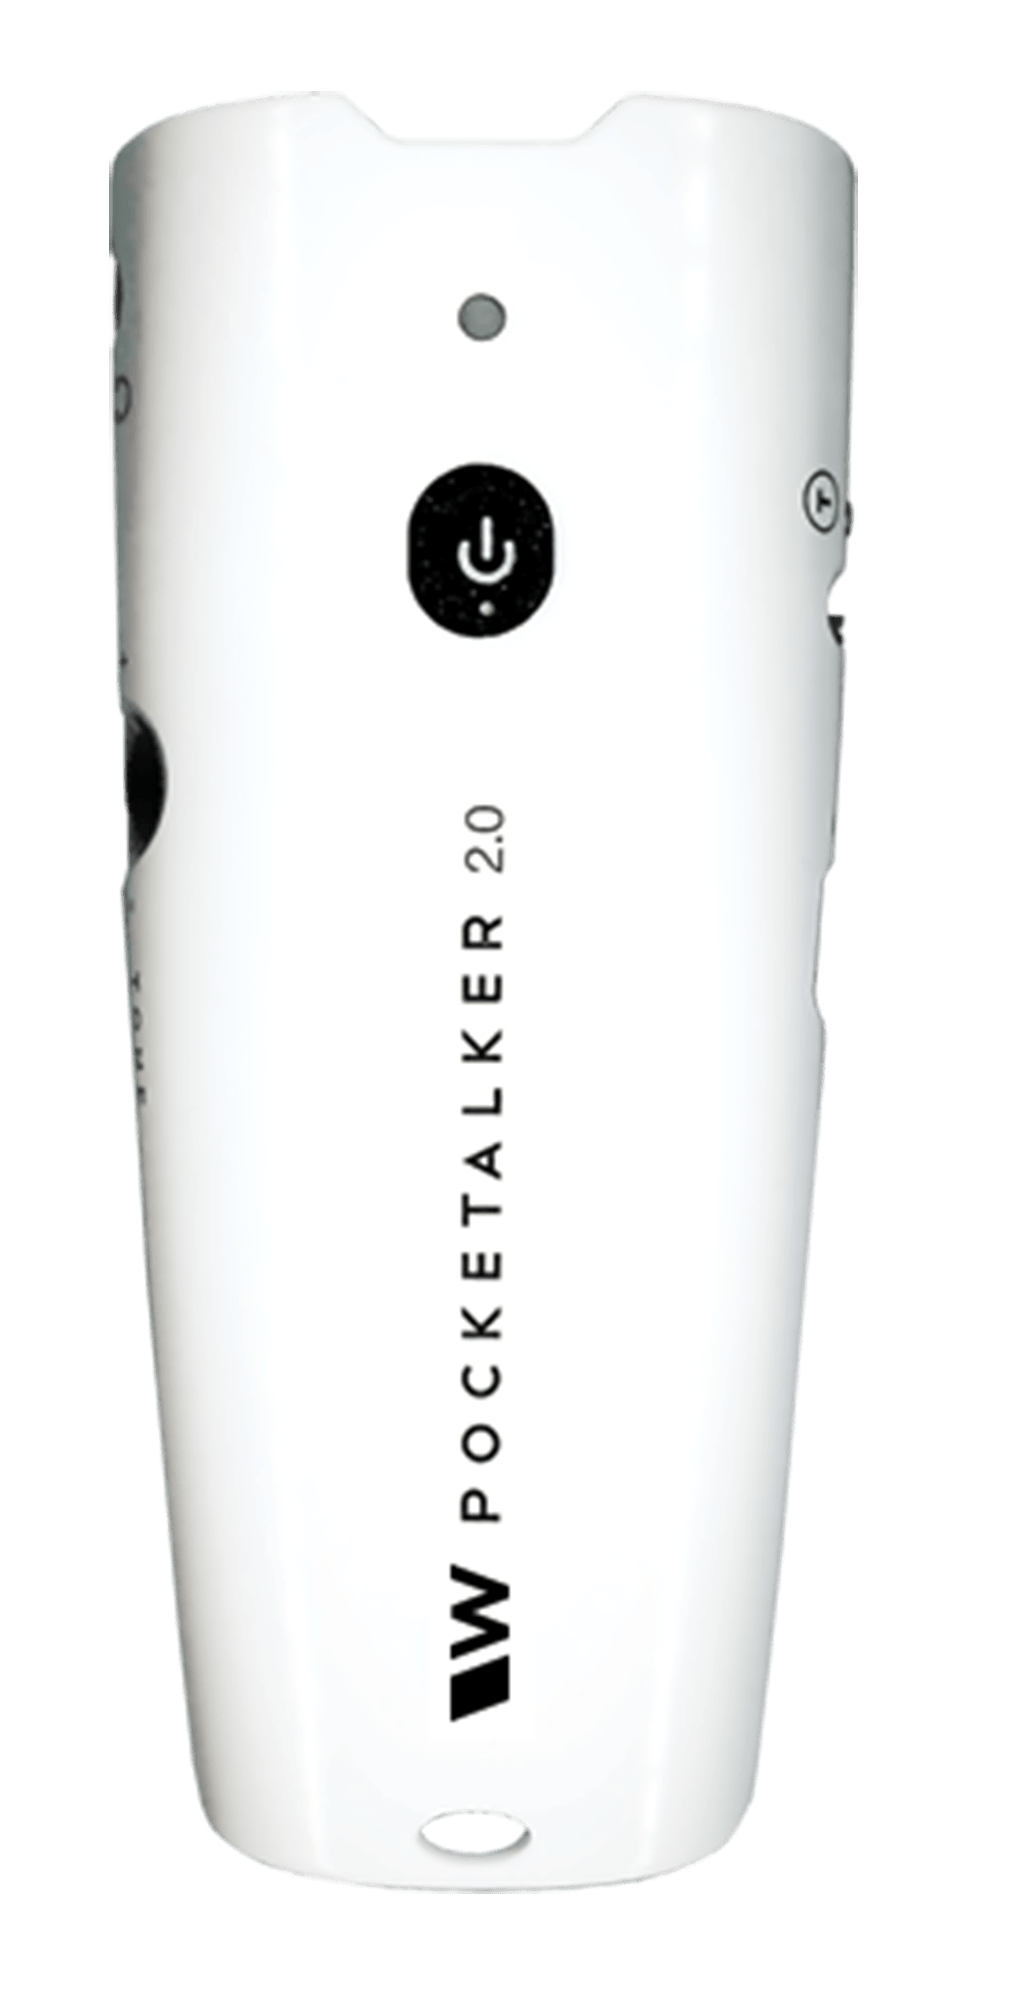 Pocketalker 2.0 Personal Amplifier